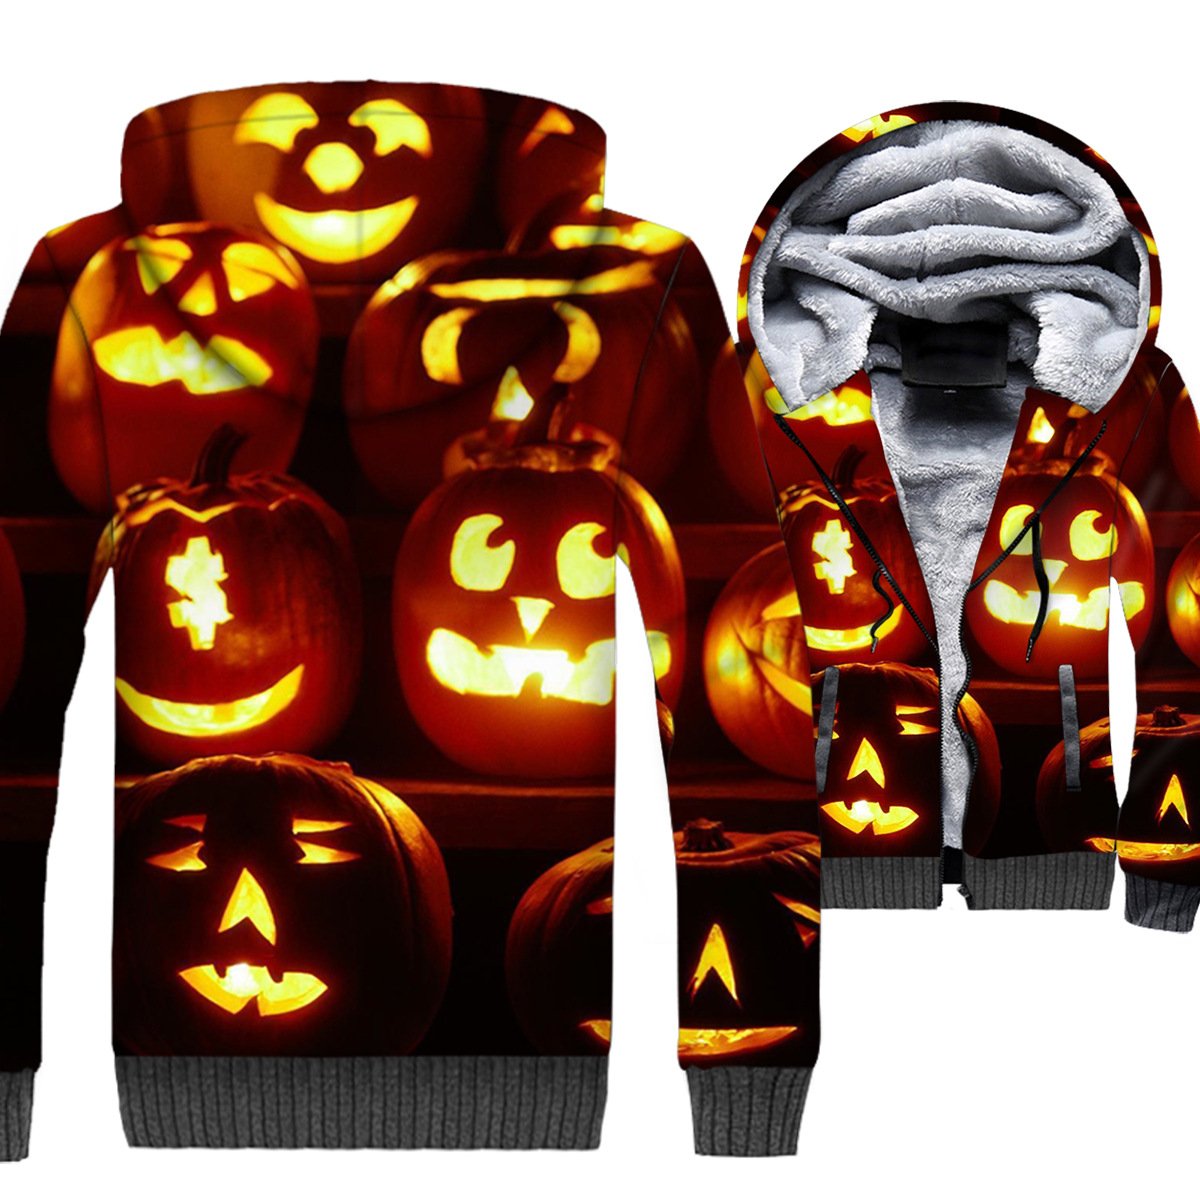 Nightmare Before Christmas Jackets - Nightmare Before Christmas Series Pumpkin Lantern 3D Fleece Jacket